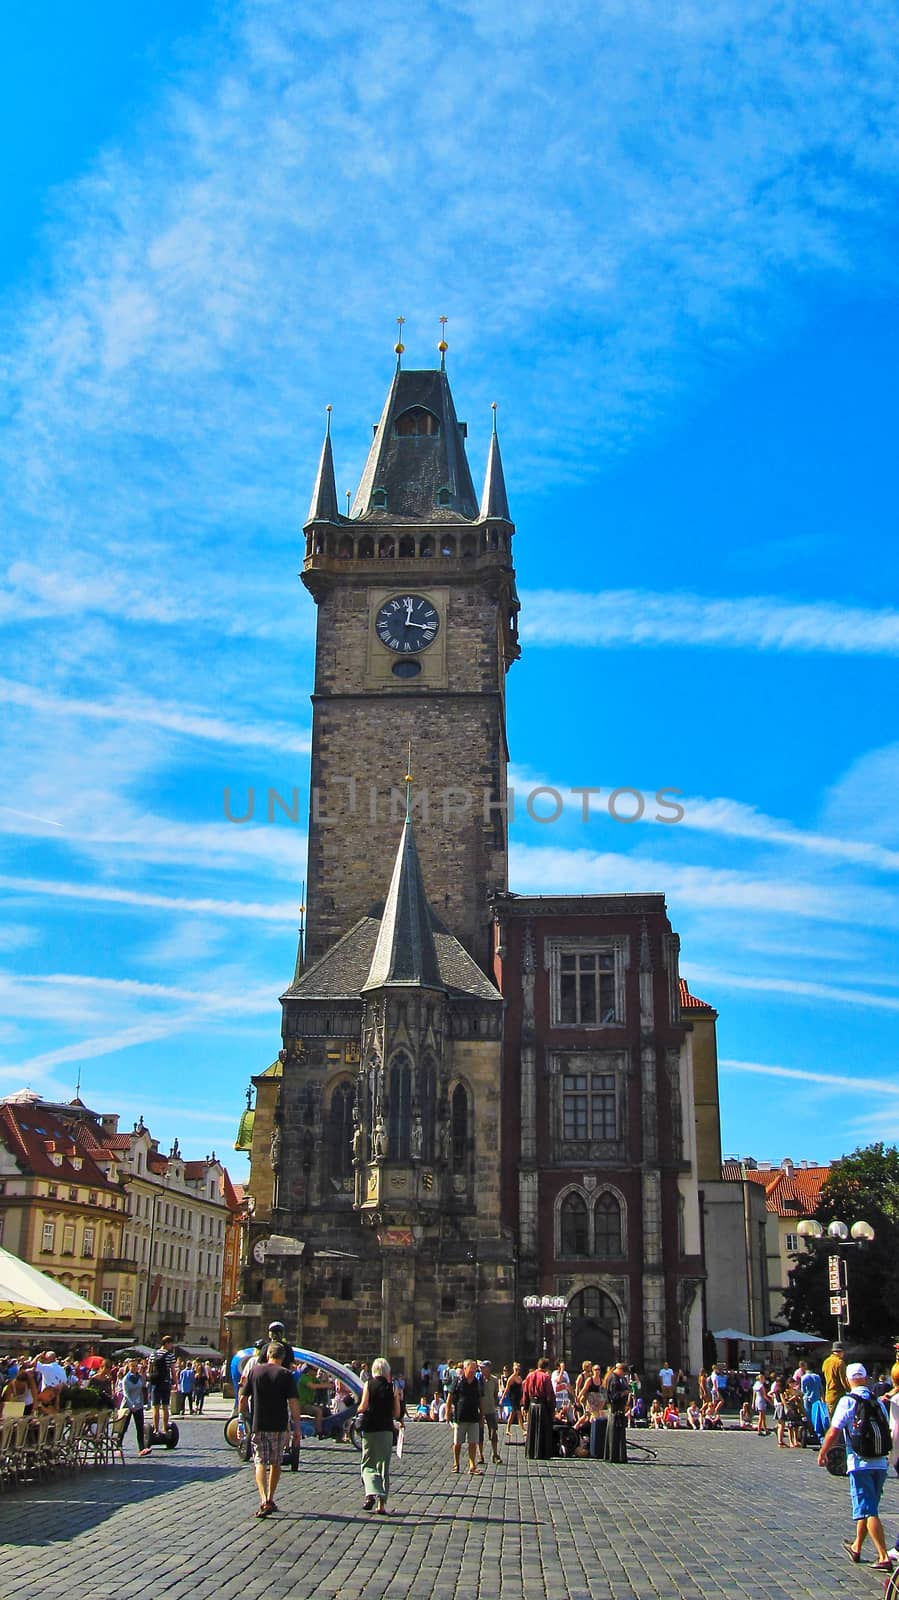 Tourist quarter of Prague, Czech Republic